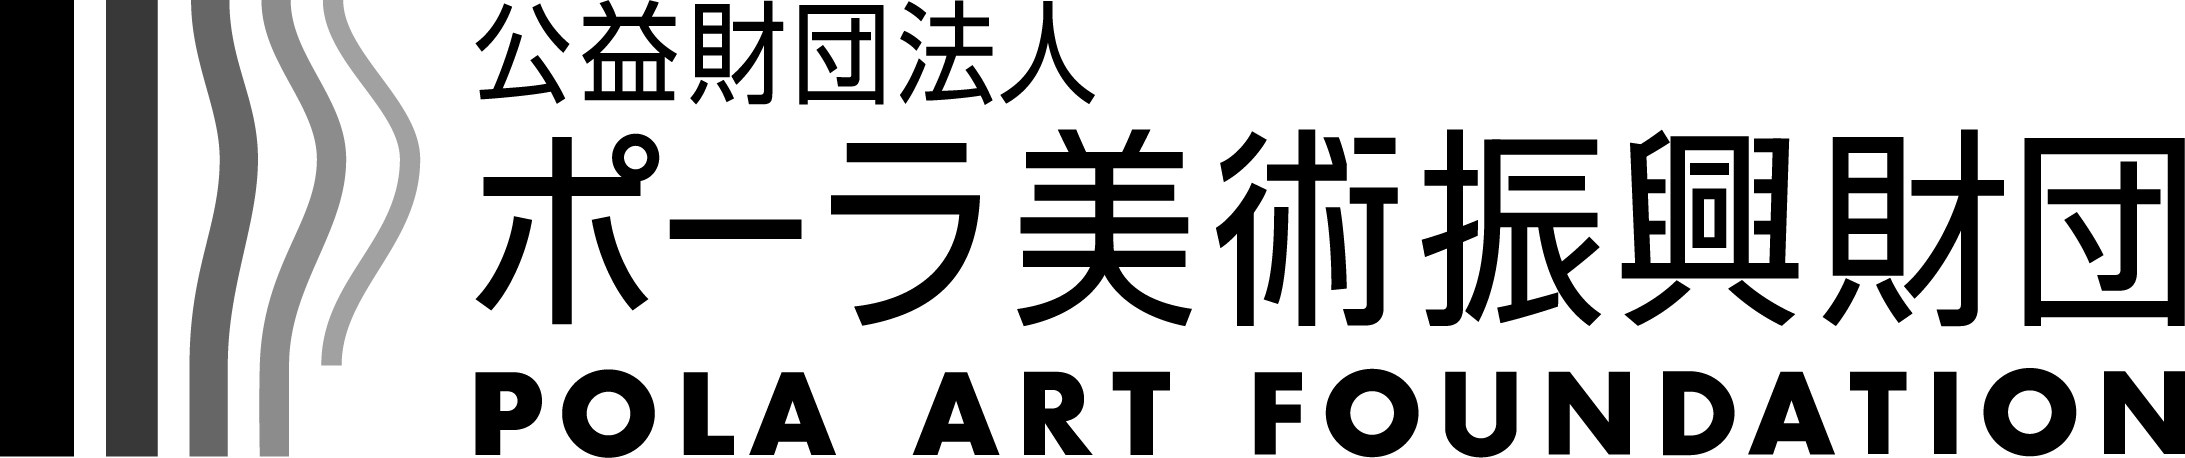 Logo_Pola Art Foundation